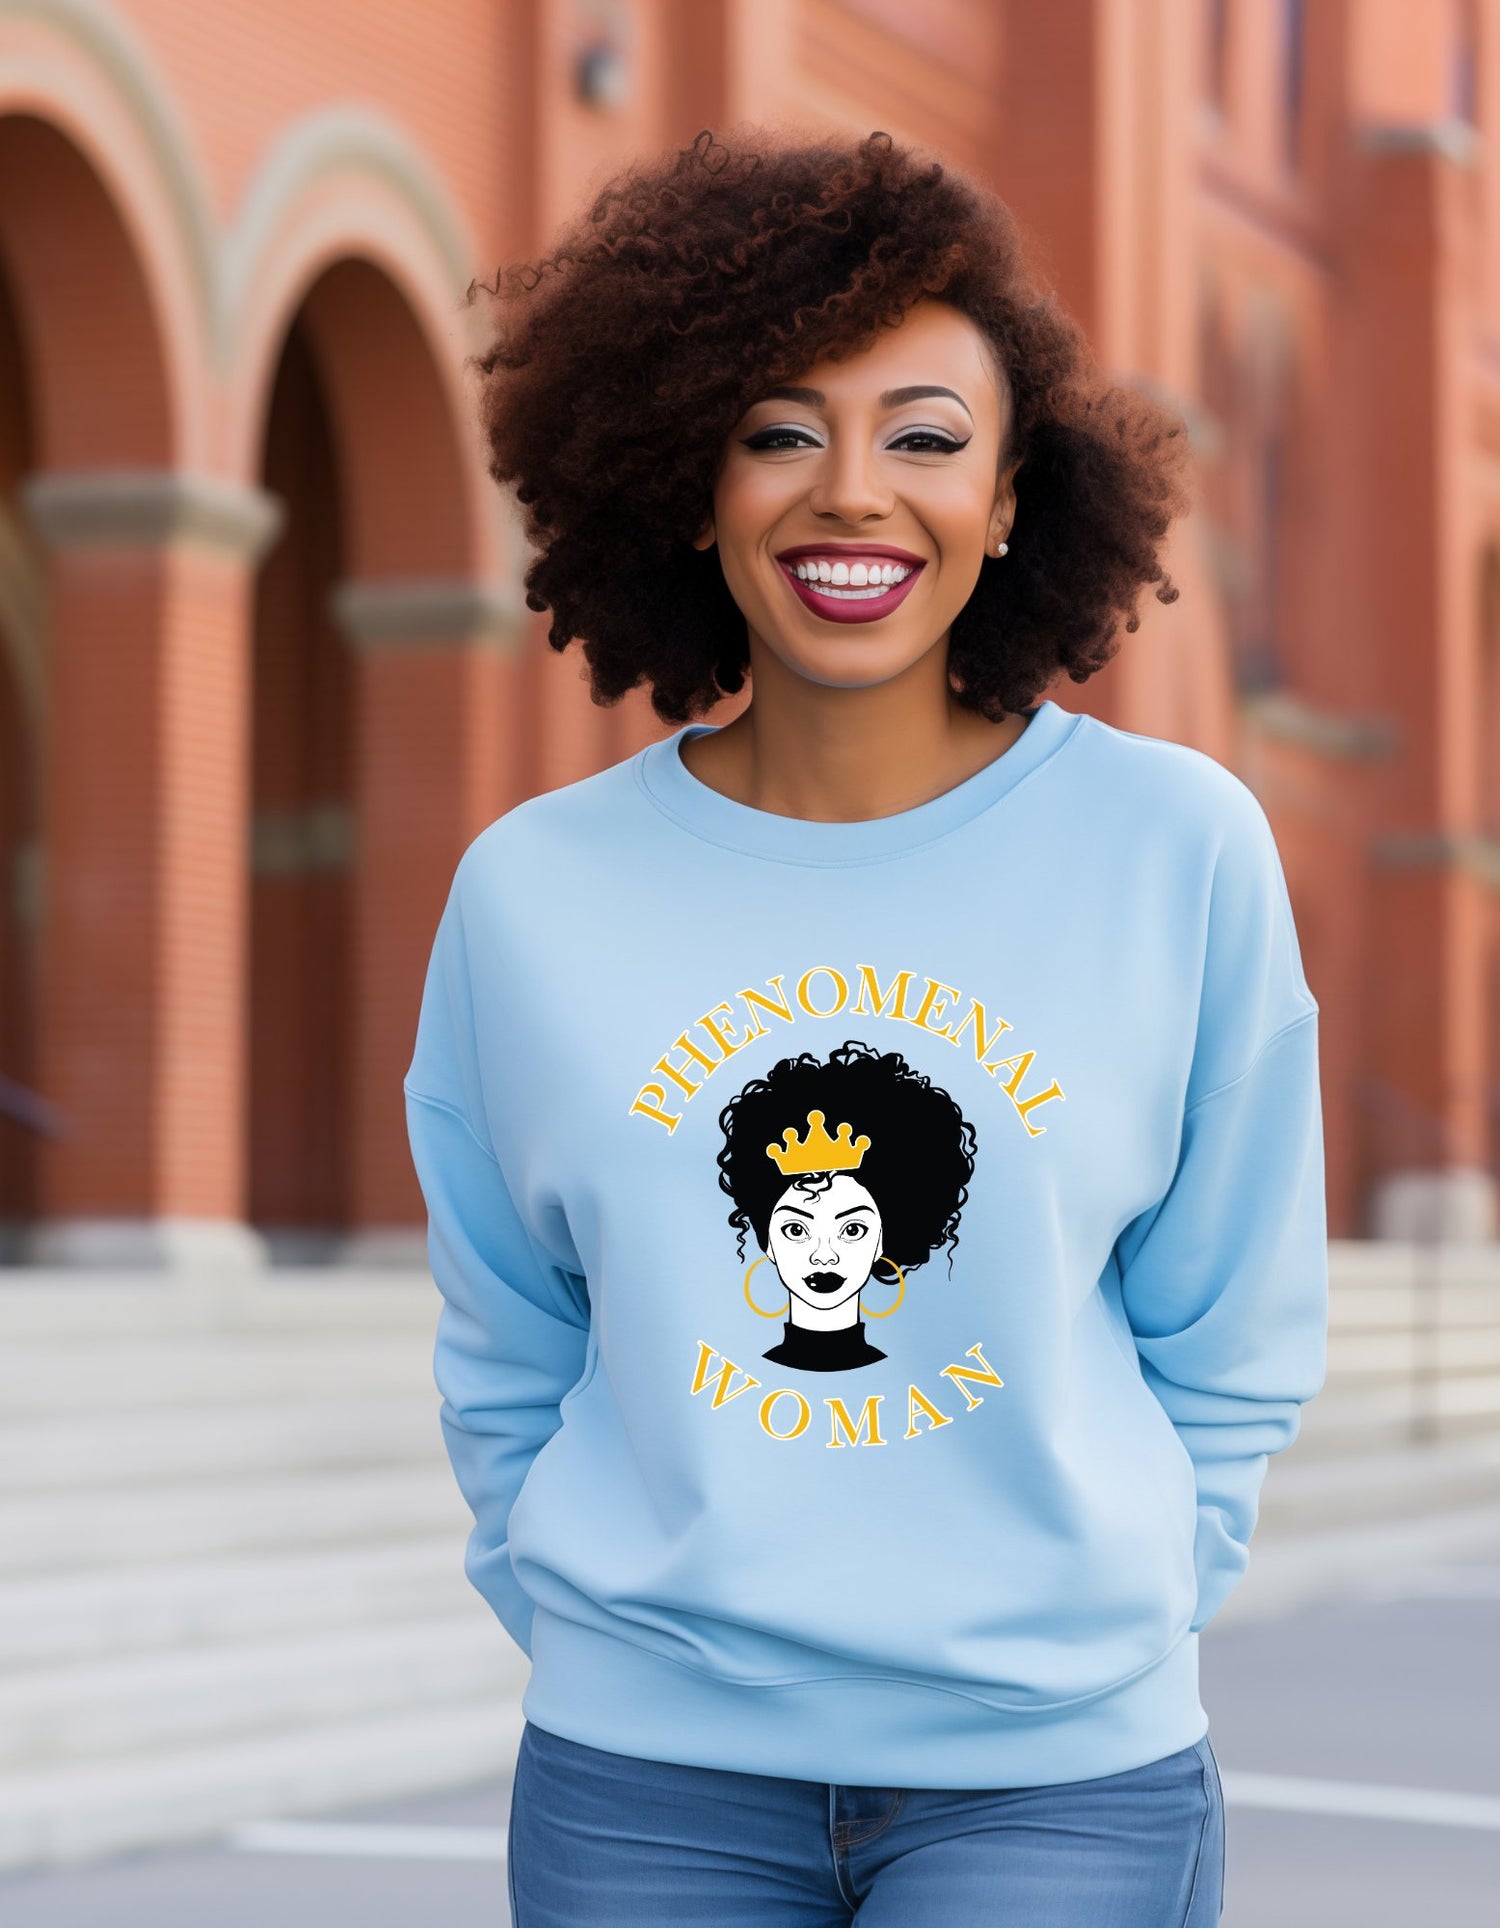 Phenomenal woman sweatshirt collection